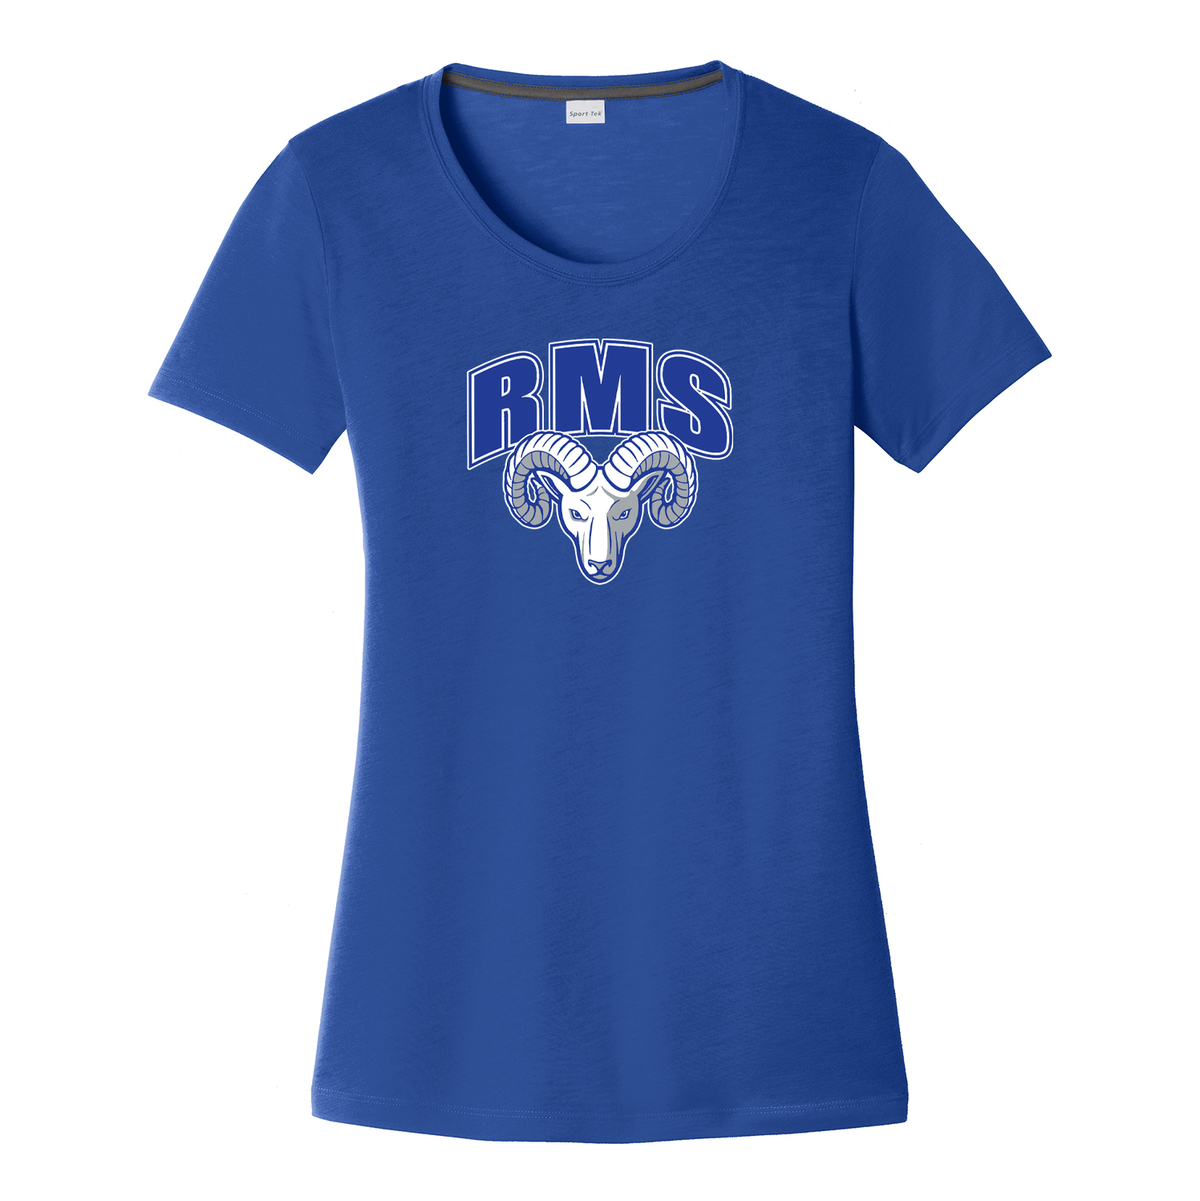 Rochambeau Middle School Women's CottonTouch Performance T-Shirt